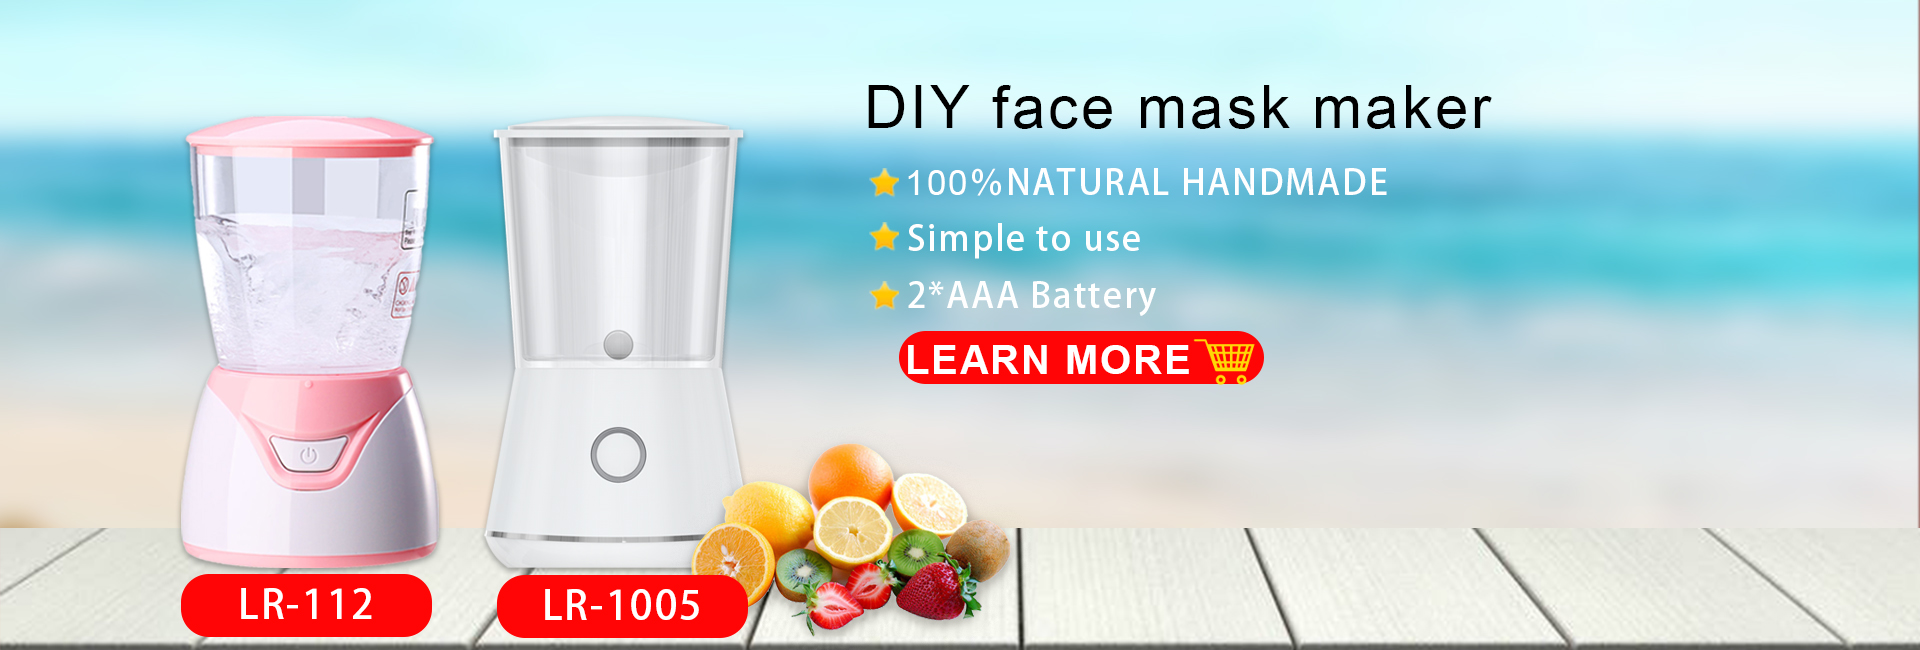 Ifine Beauty hot seller Skin Care DIY Fruit Face Mask Machine 32 Collagen Peptides Facial Mask device free Green Tea mask stick